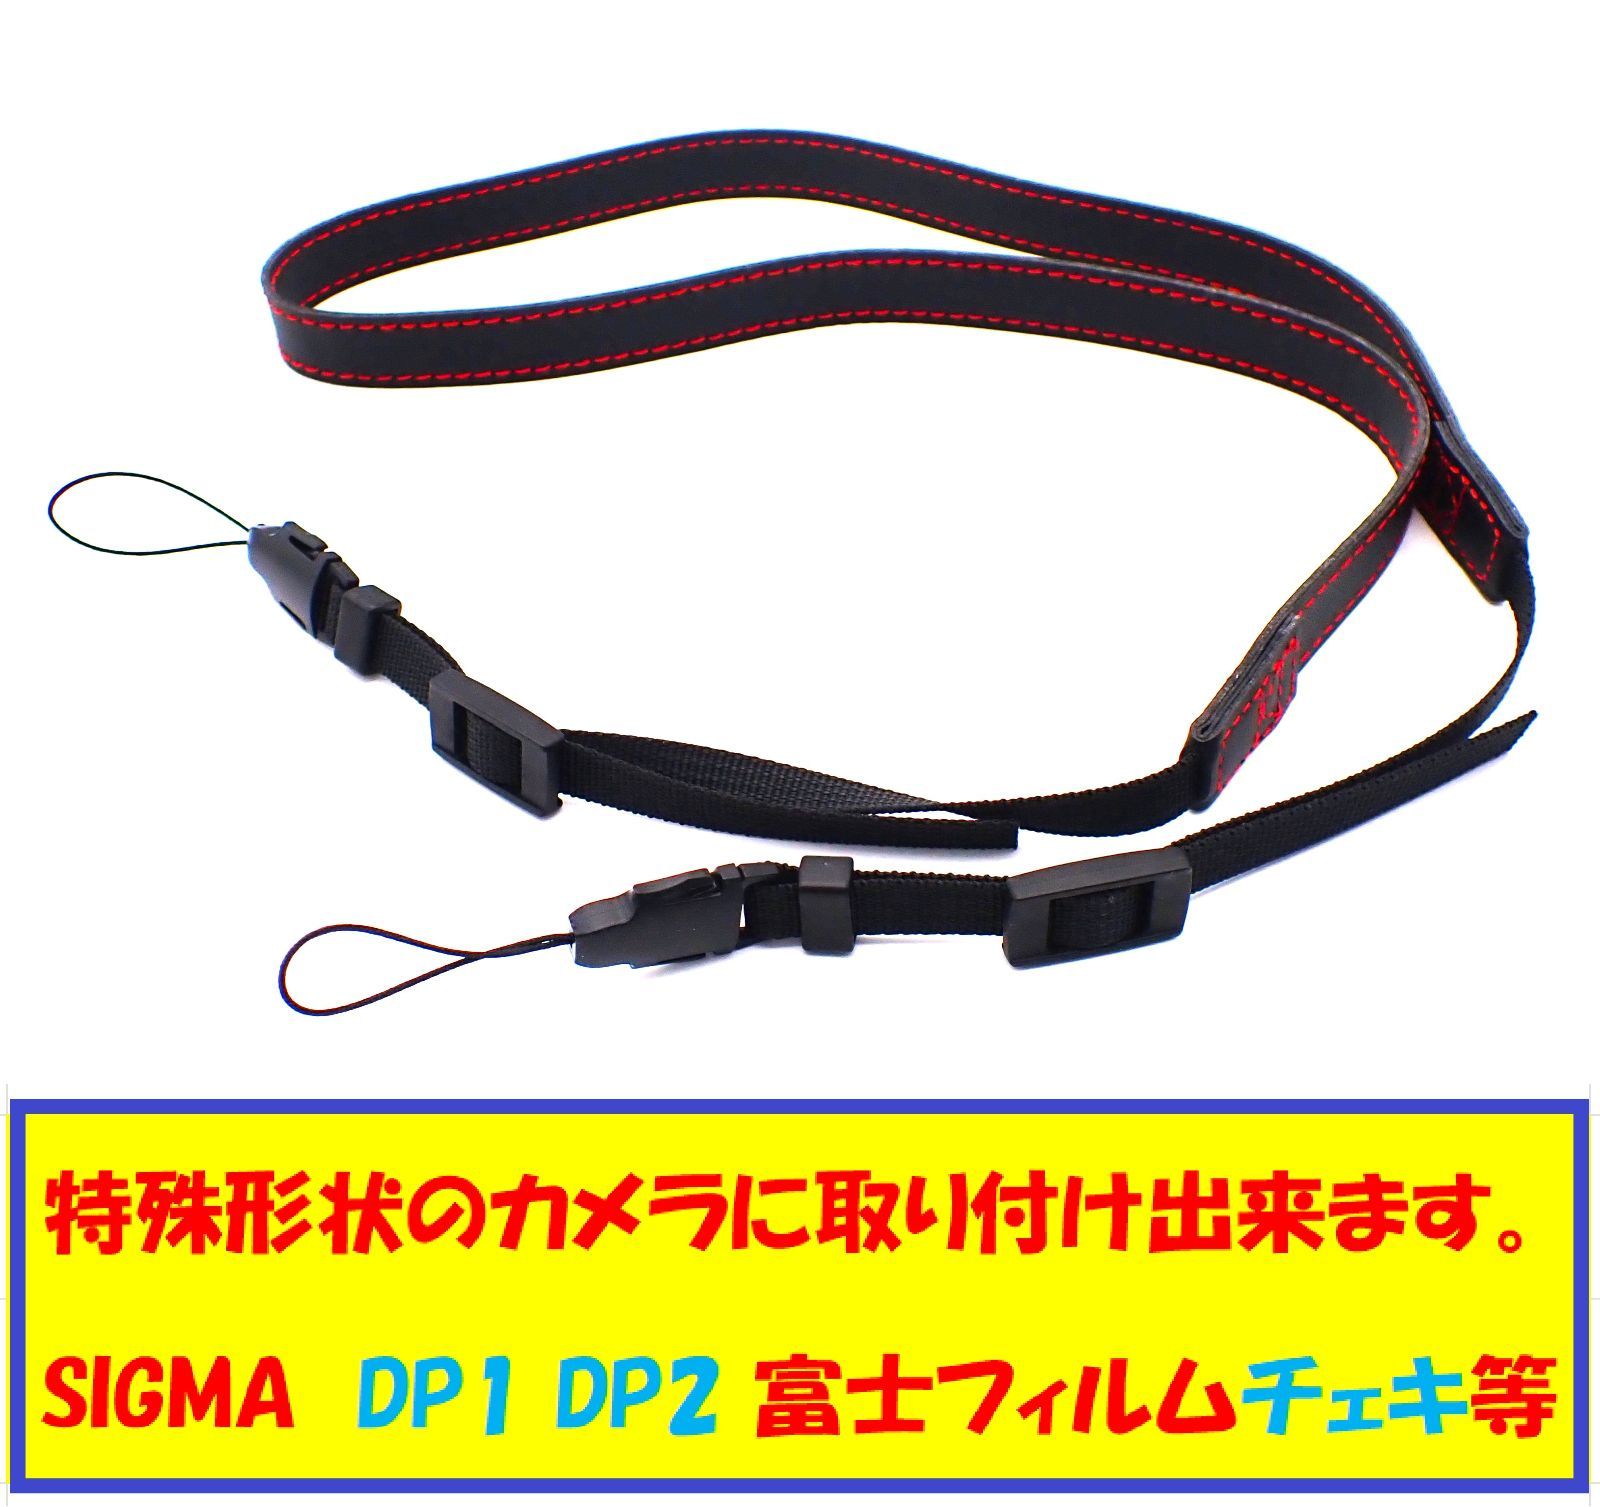 SIGMA シグマ DP1・DP2用 汎用ストラップ 送料無料!! - メルカリ